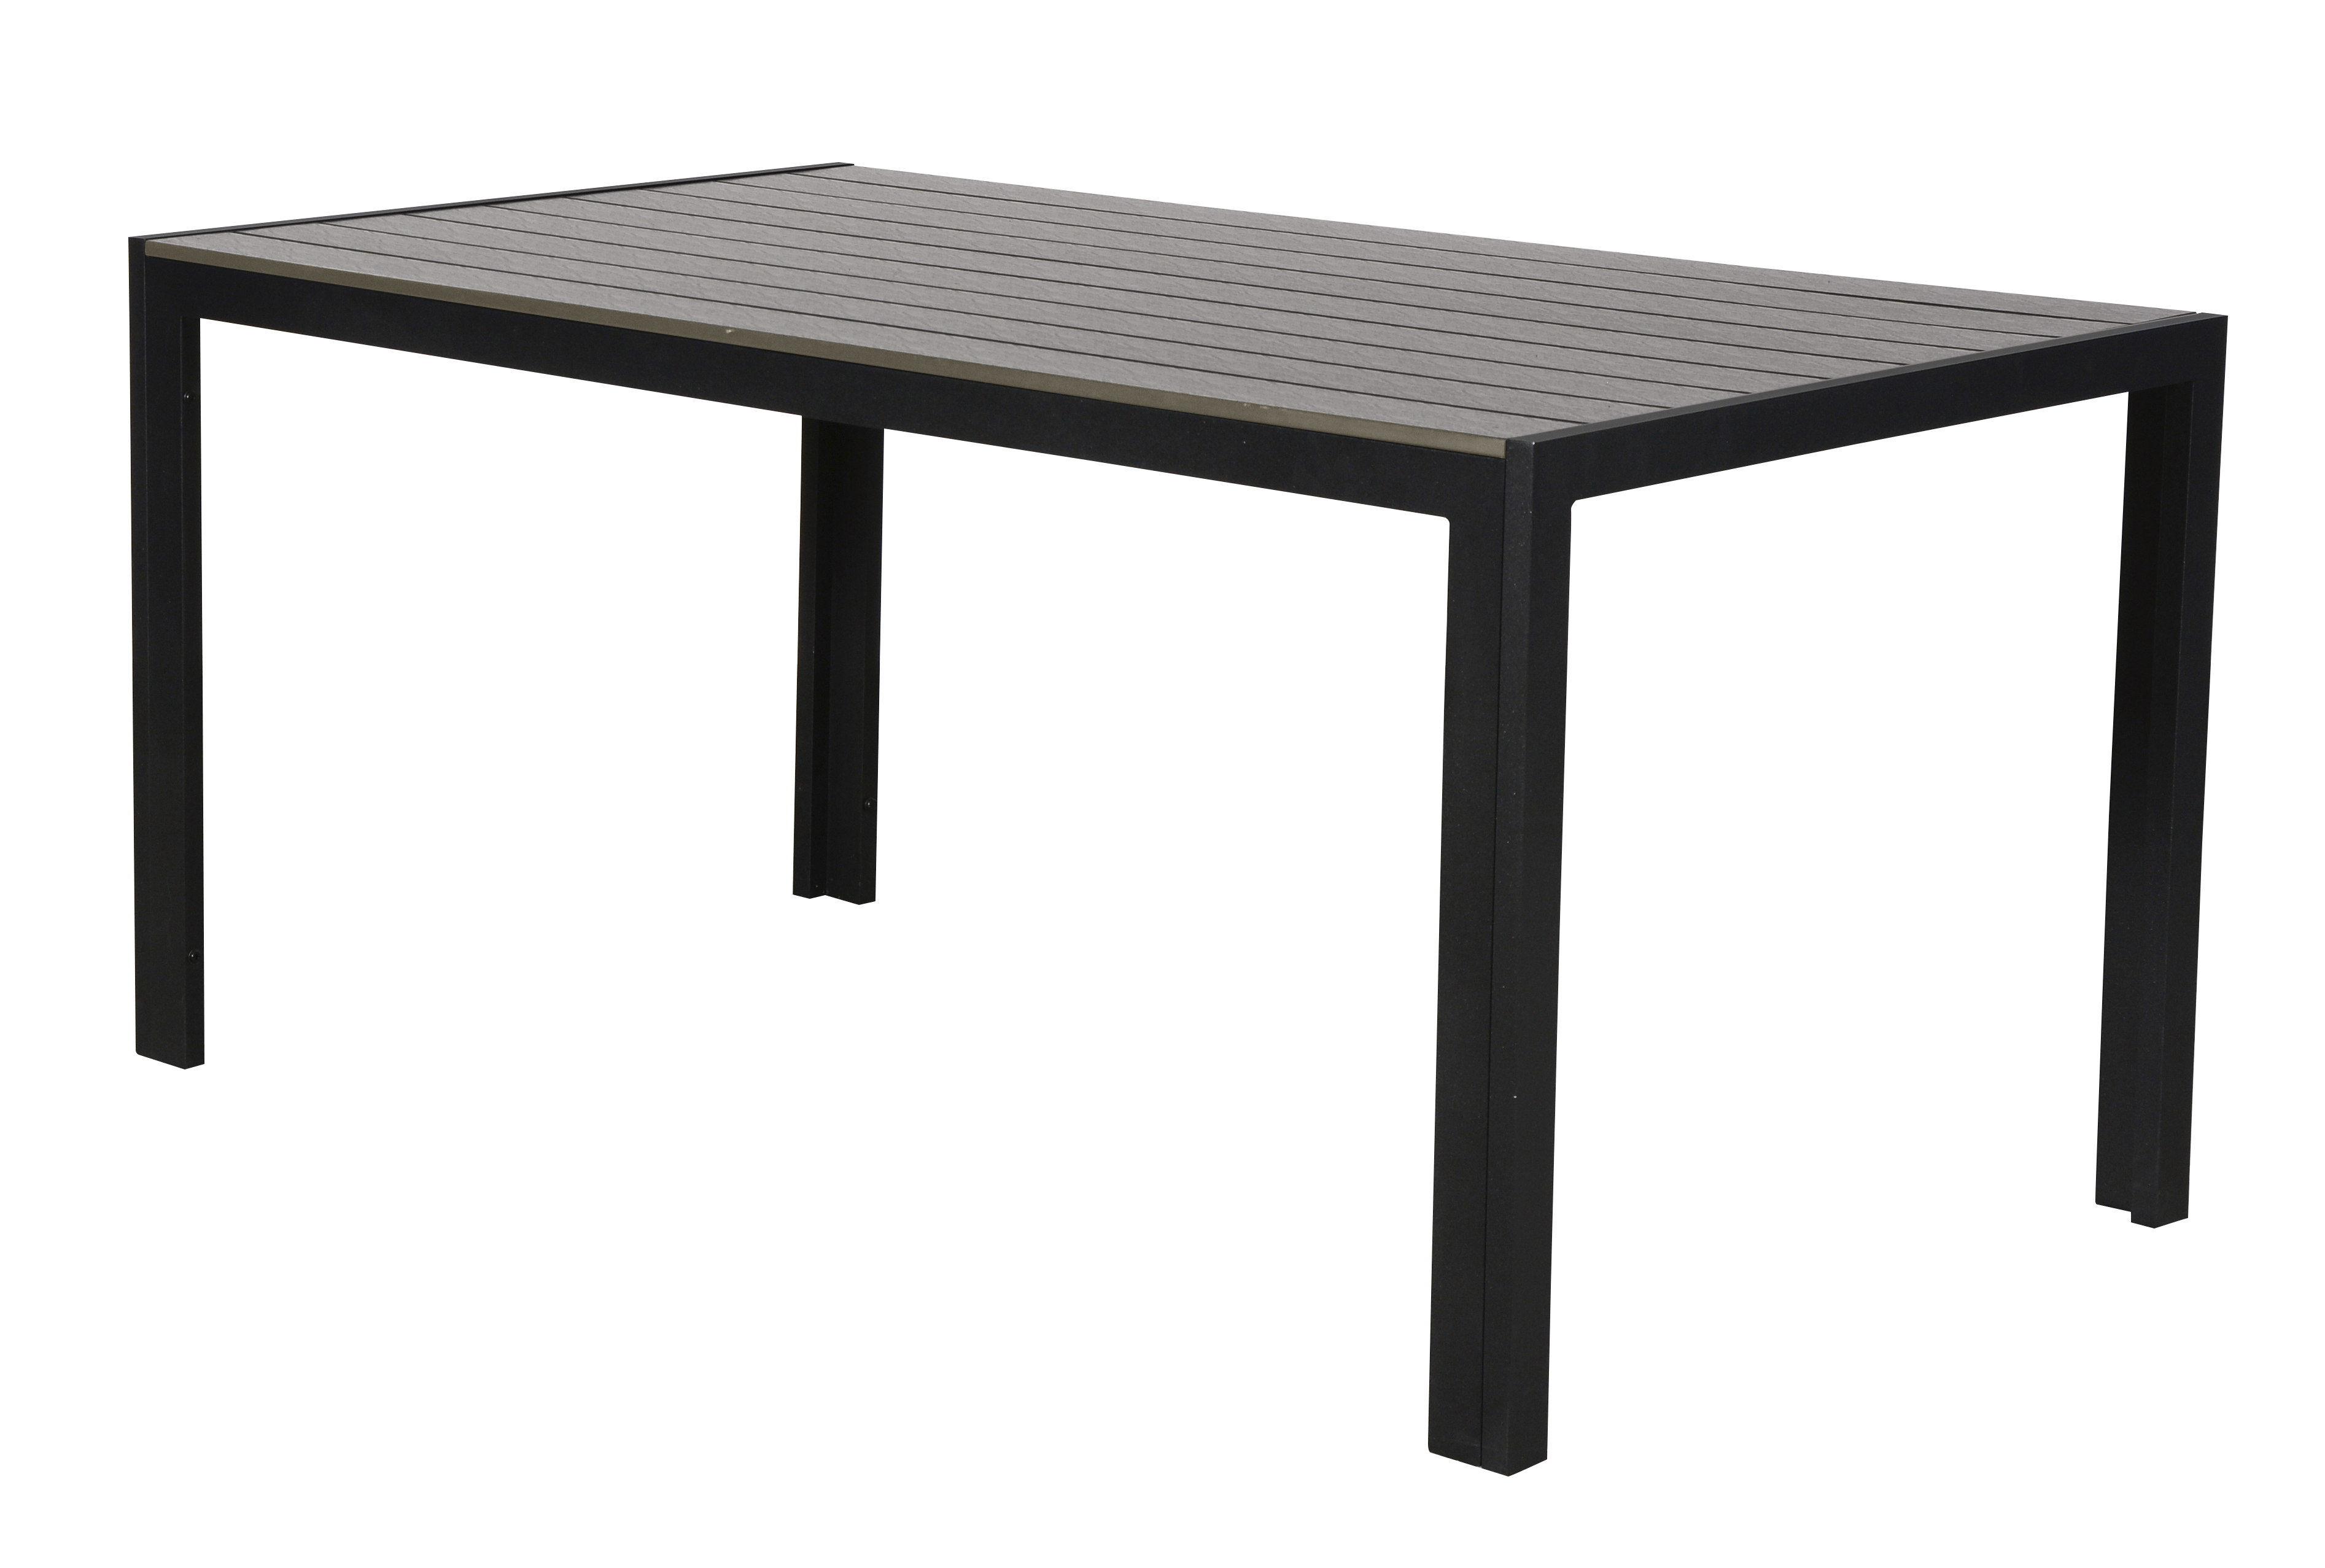 Living Outdoor - Venoe Garden Table 150 x 90 cm -  Aluminium/Polywood - Black/Grey Oak (629018)